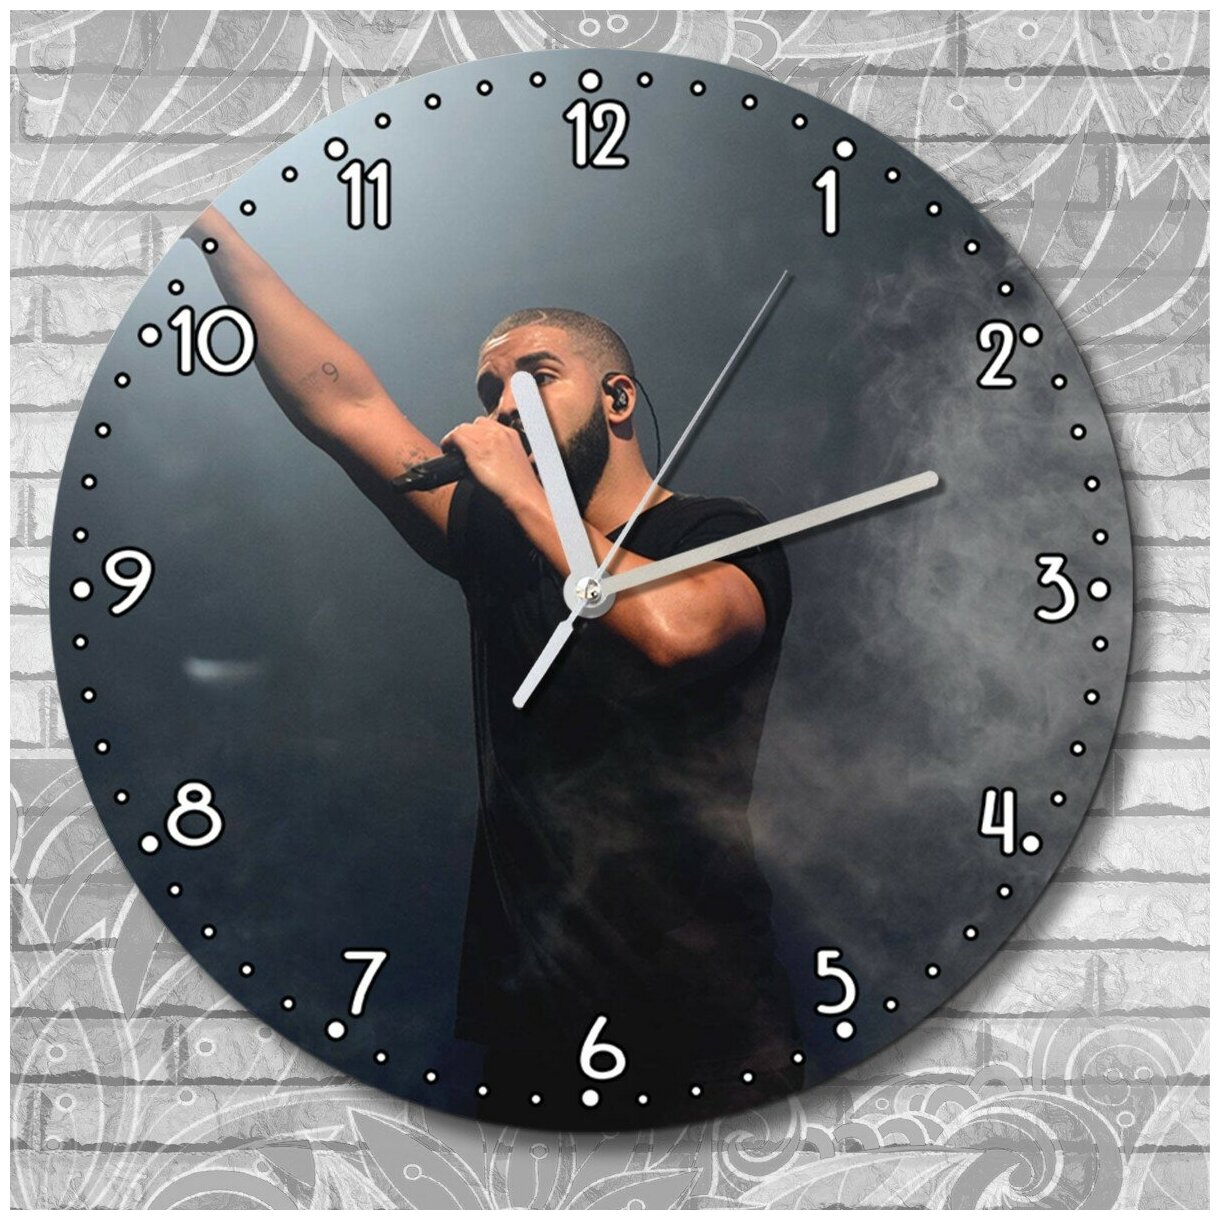 Настенные часы УФ музыка (music, rap, hip hop, sound, руки вверх, hands up, style, graffiti, life) - 2041